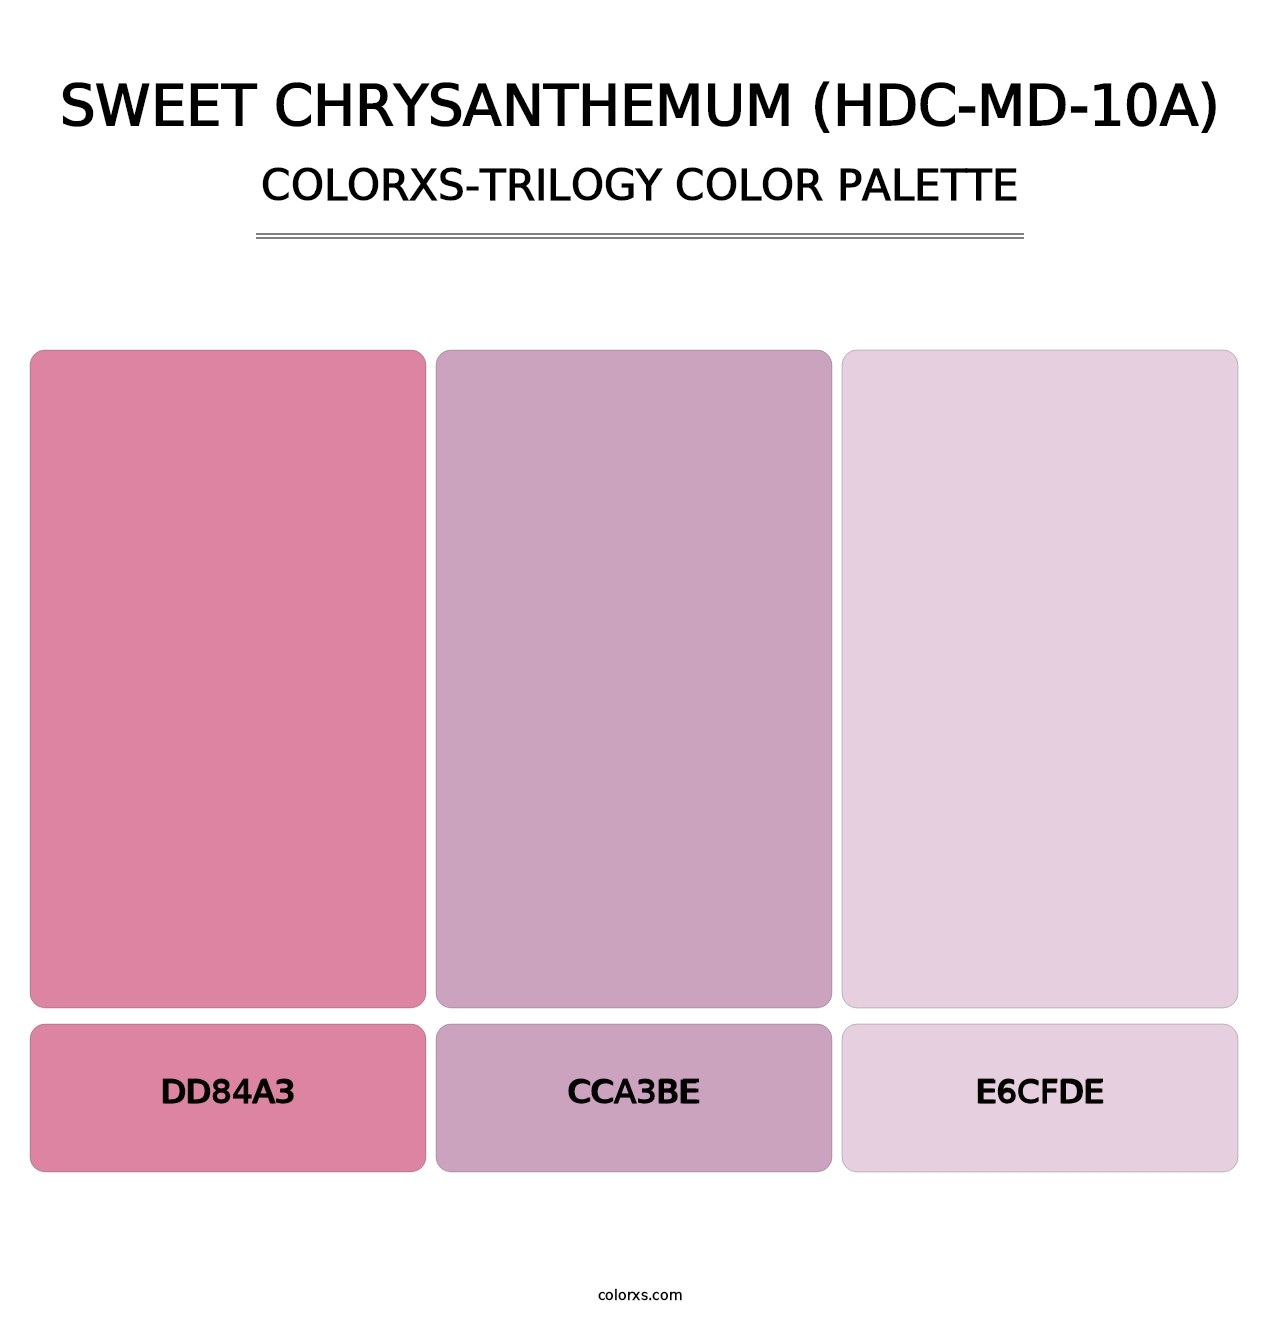 Sweet Chrysanthemum (HDC-MD-10A) - Colorxs Trilogy Palette